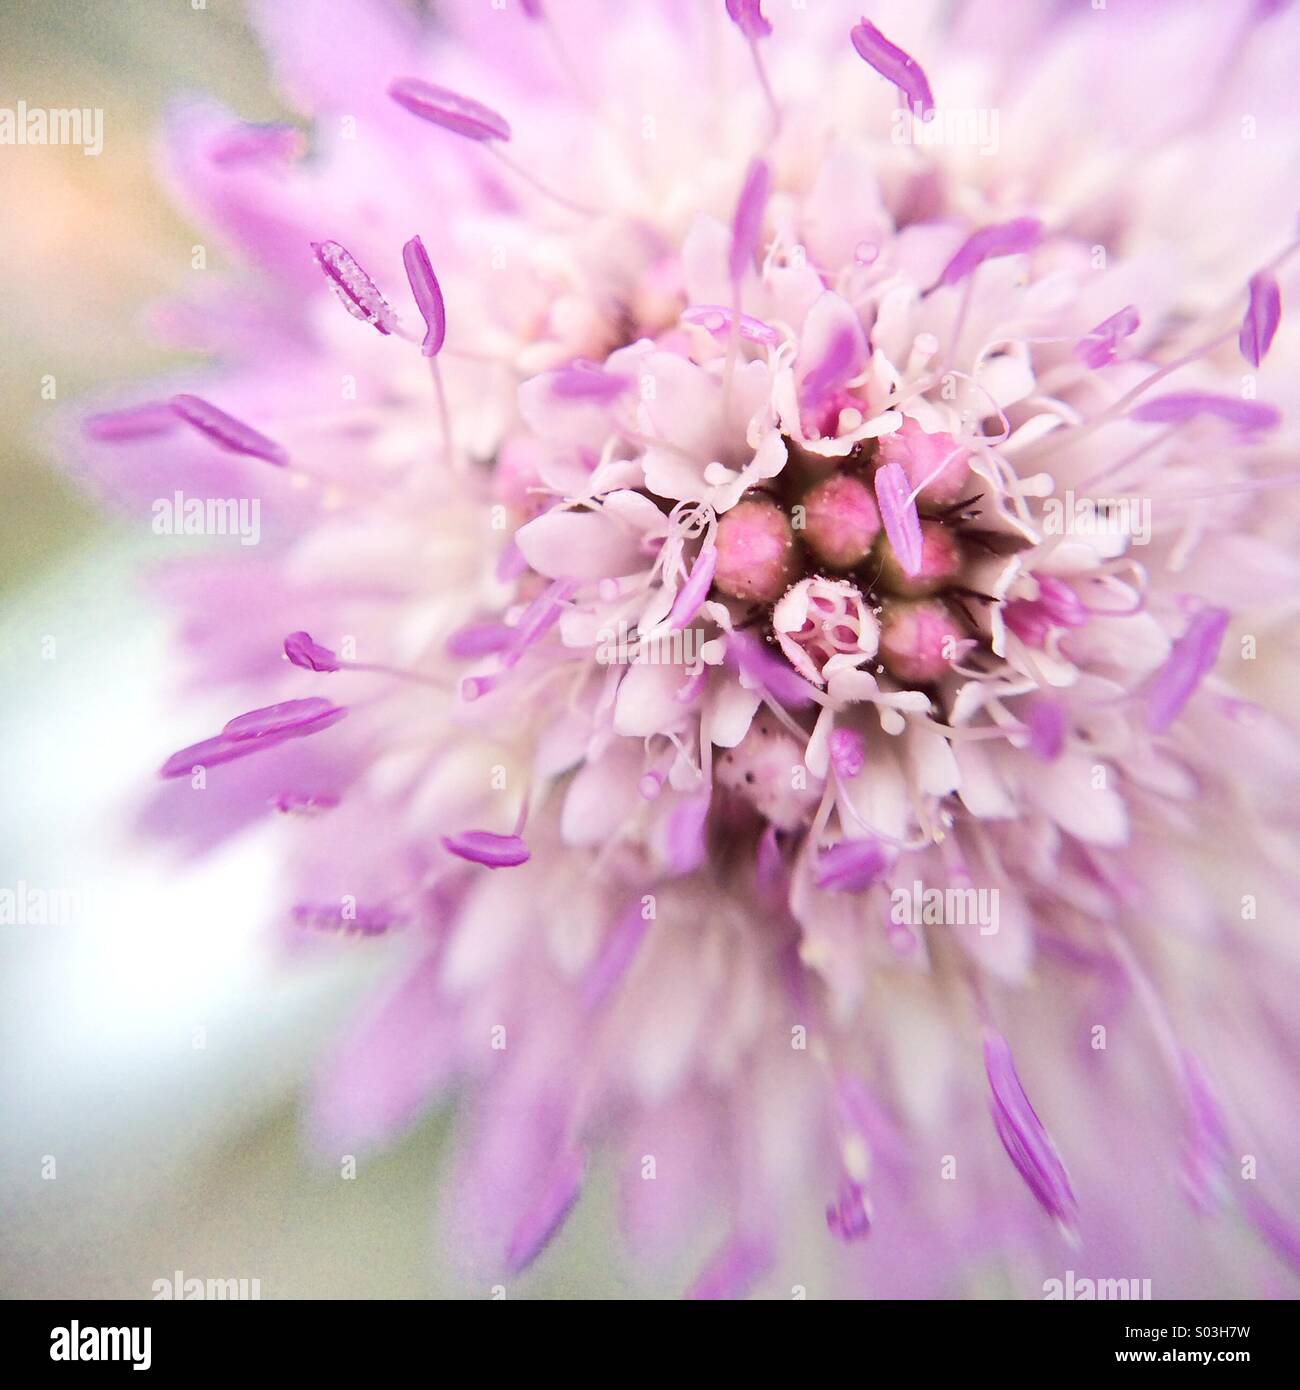 Macro of a pincushion flower. Stock Photo